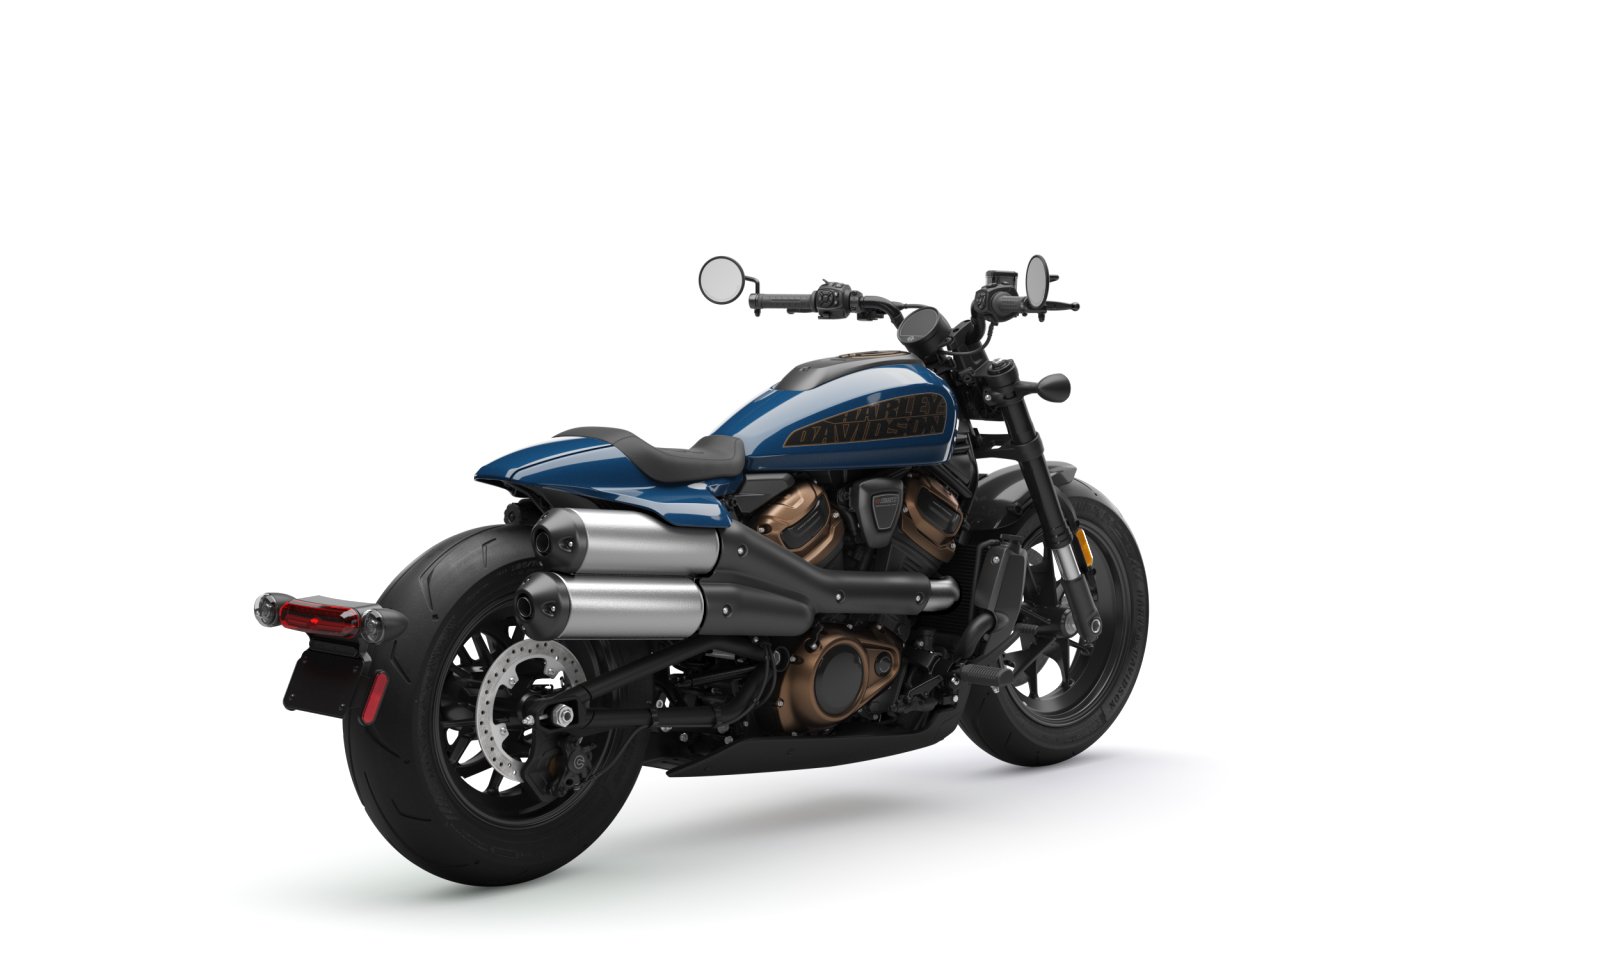 2023 Sportster S Motorcycle | Harley-Davidson APAC